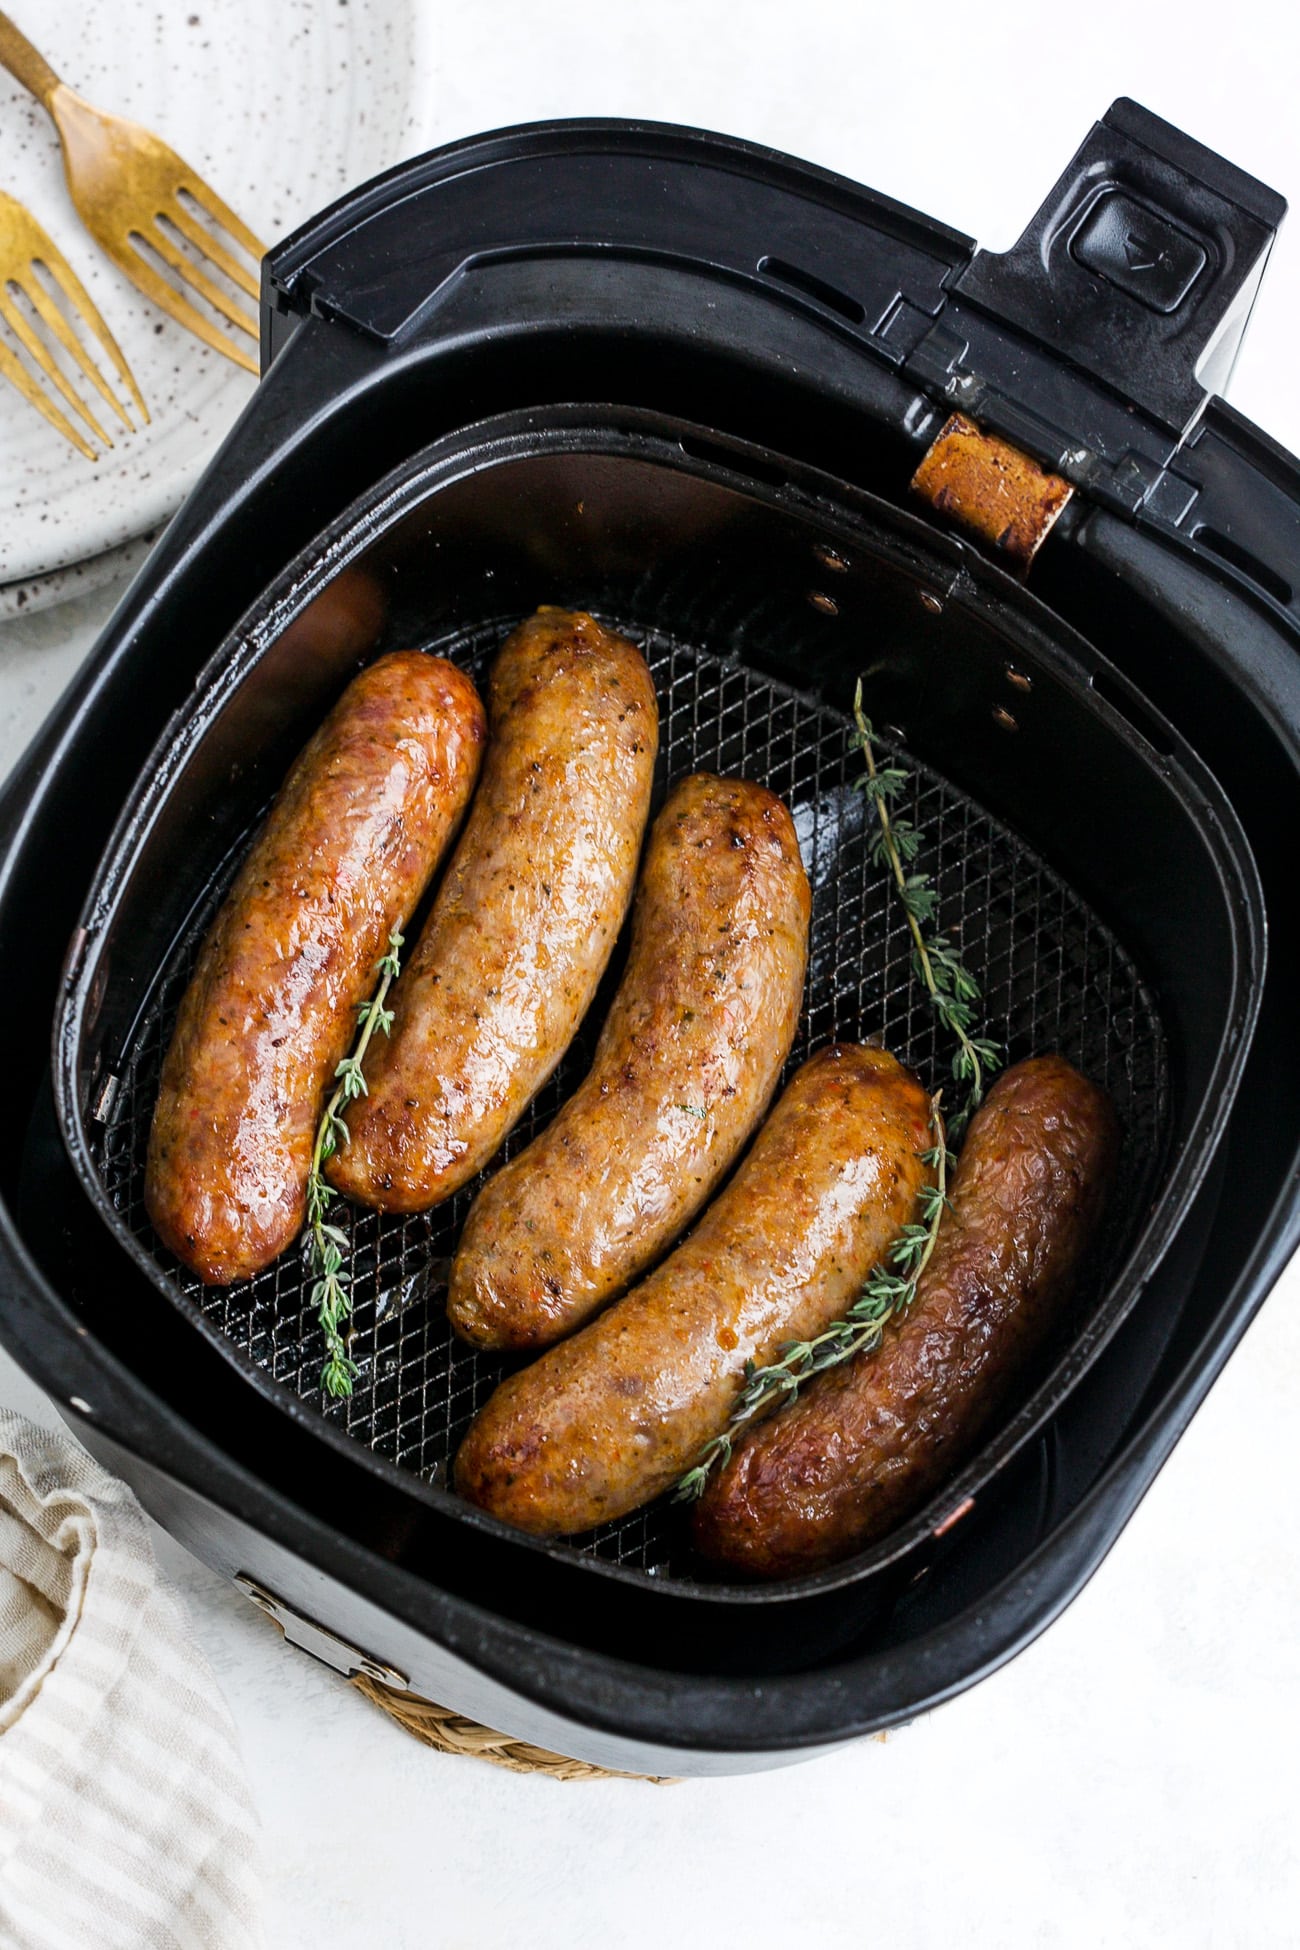 Cooked sausage in air fryer basket. 